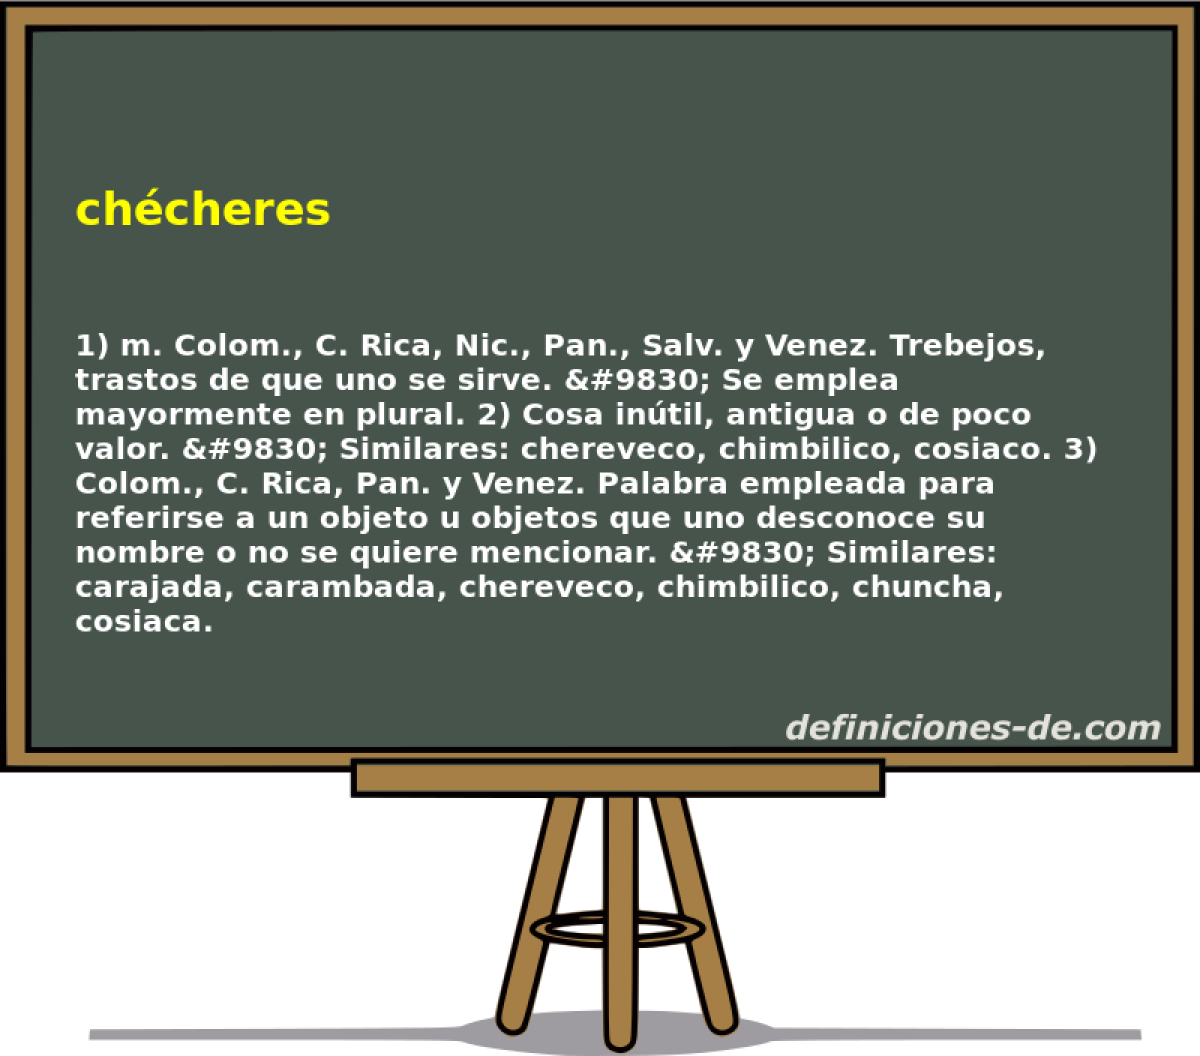 chcheres 